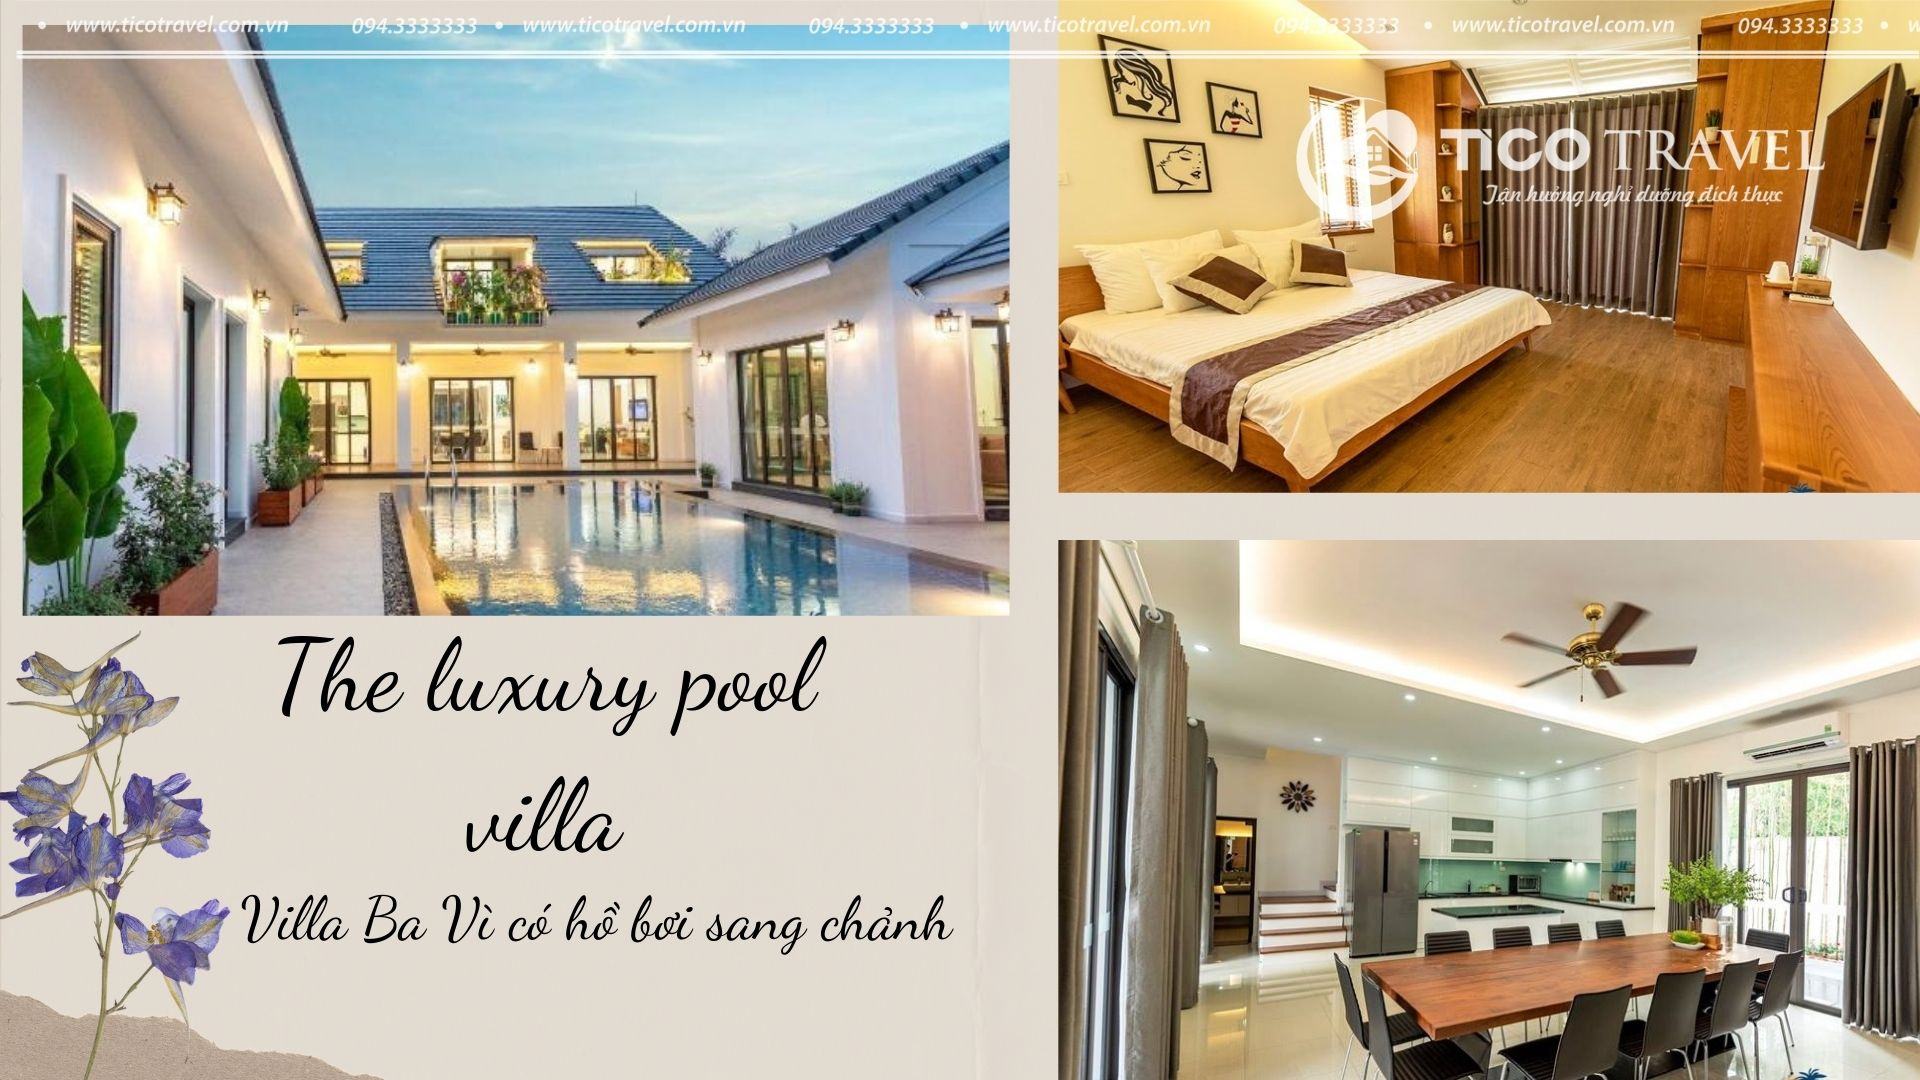 The pool luxury villa